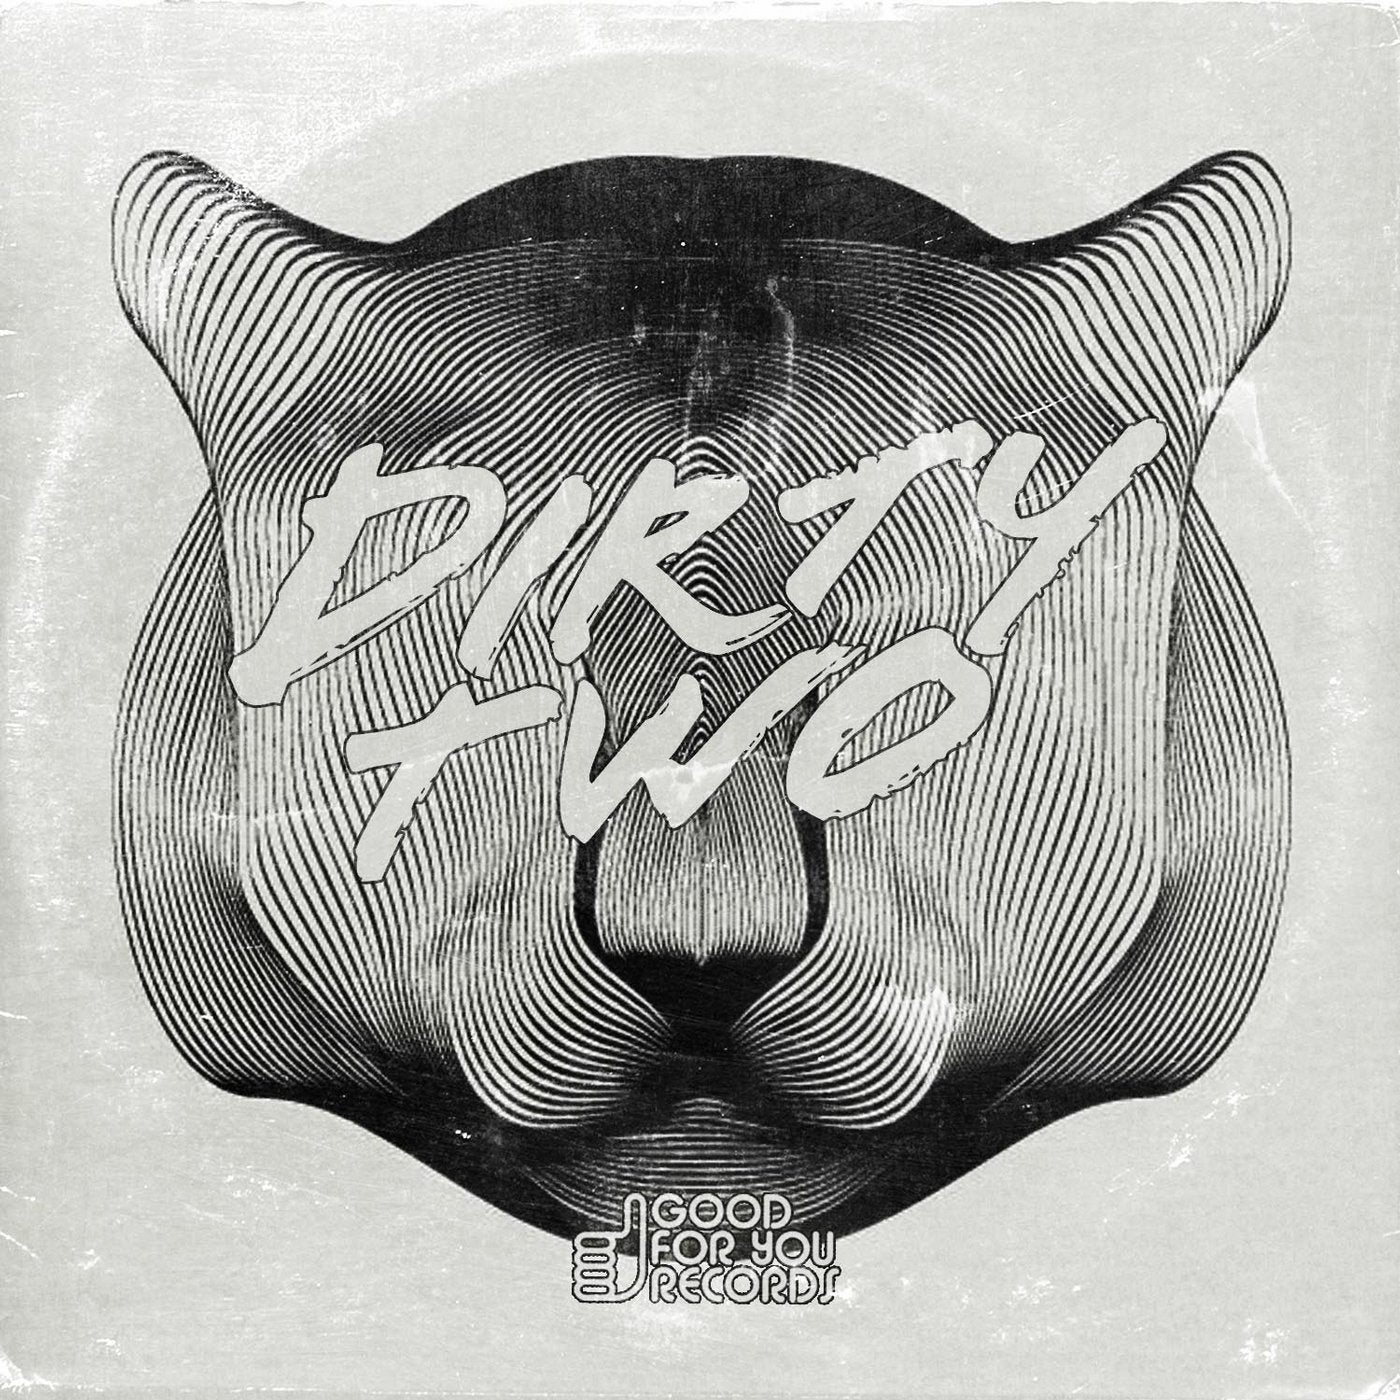 Dirtytwo - In Ulmox We Trust EP